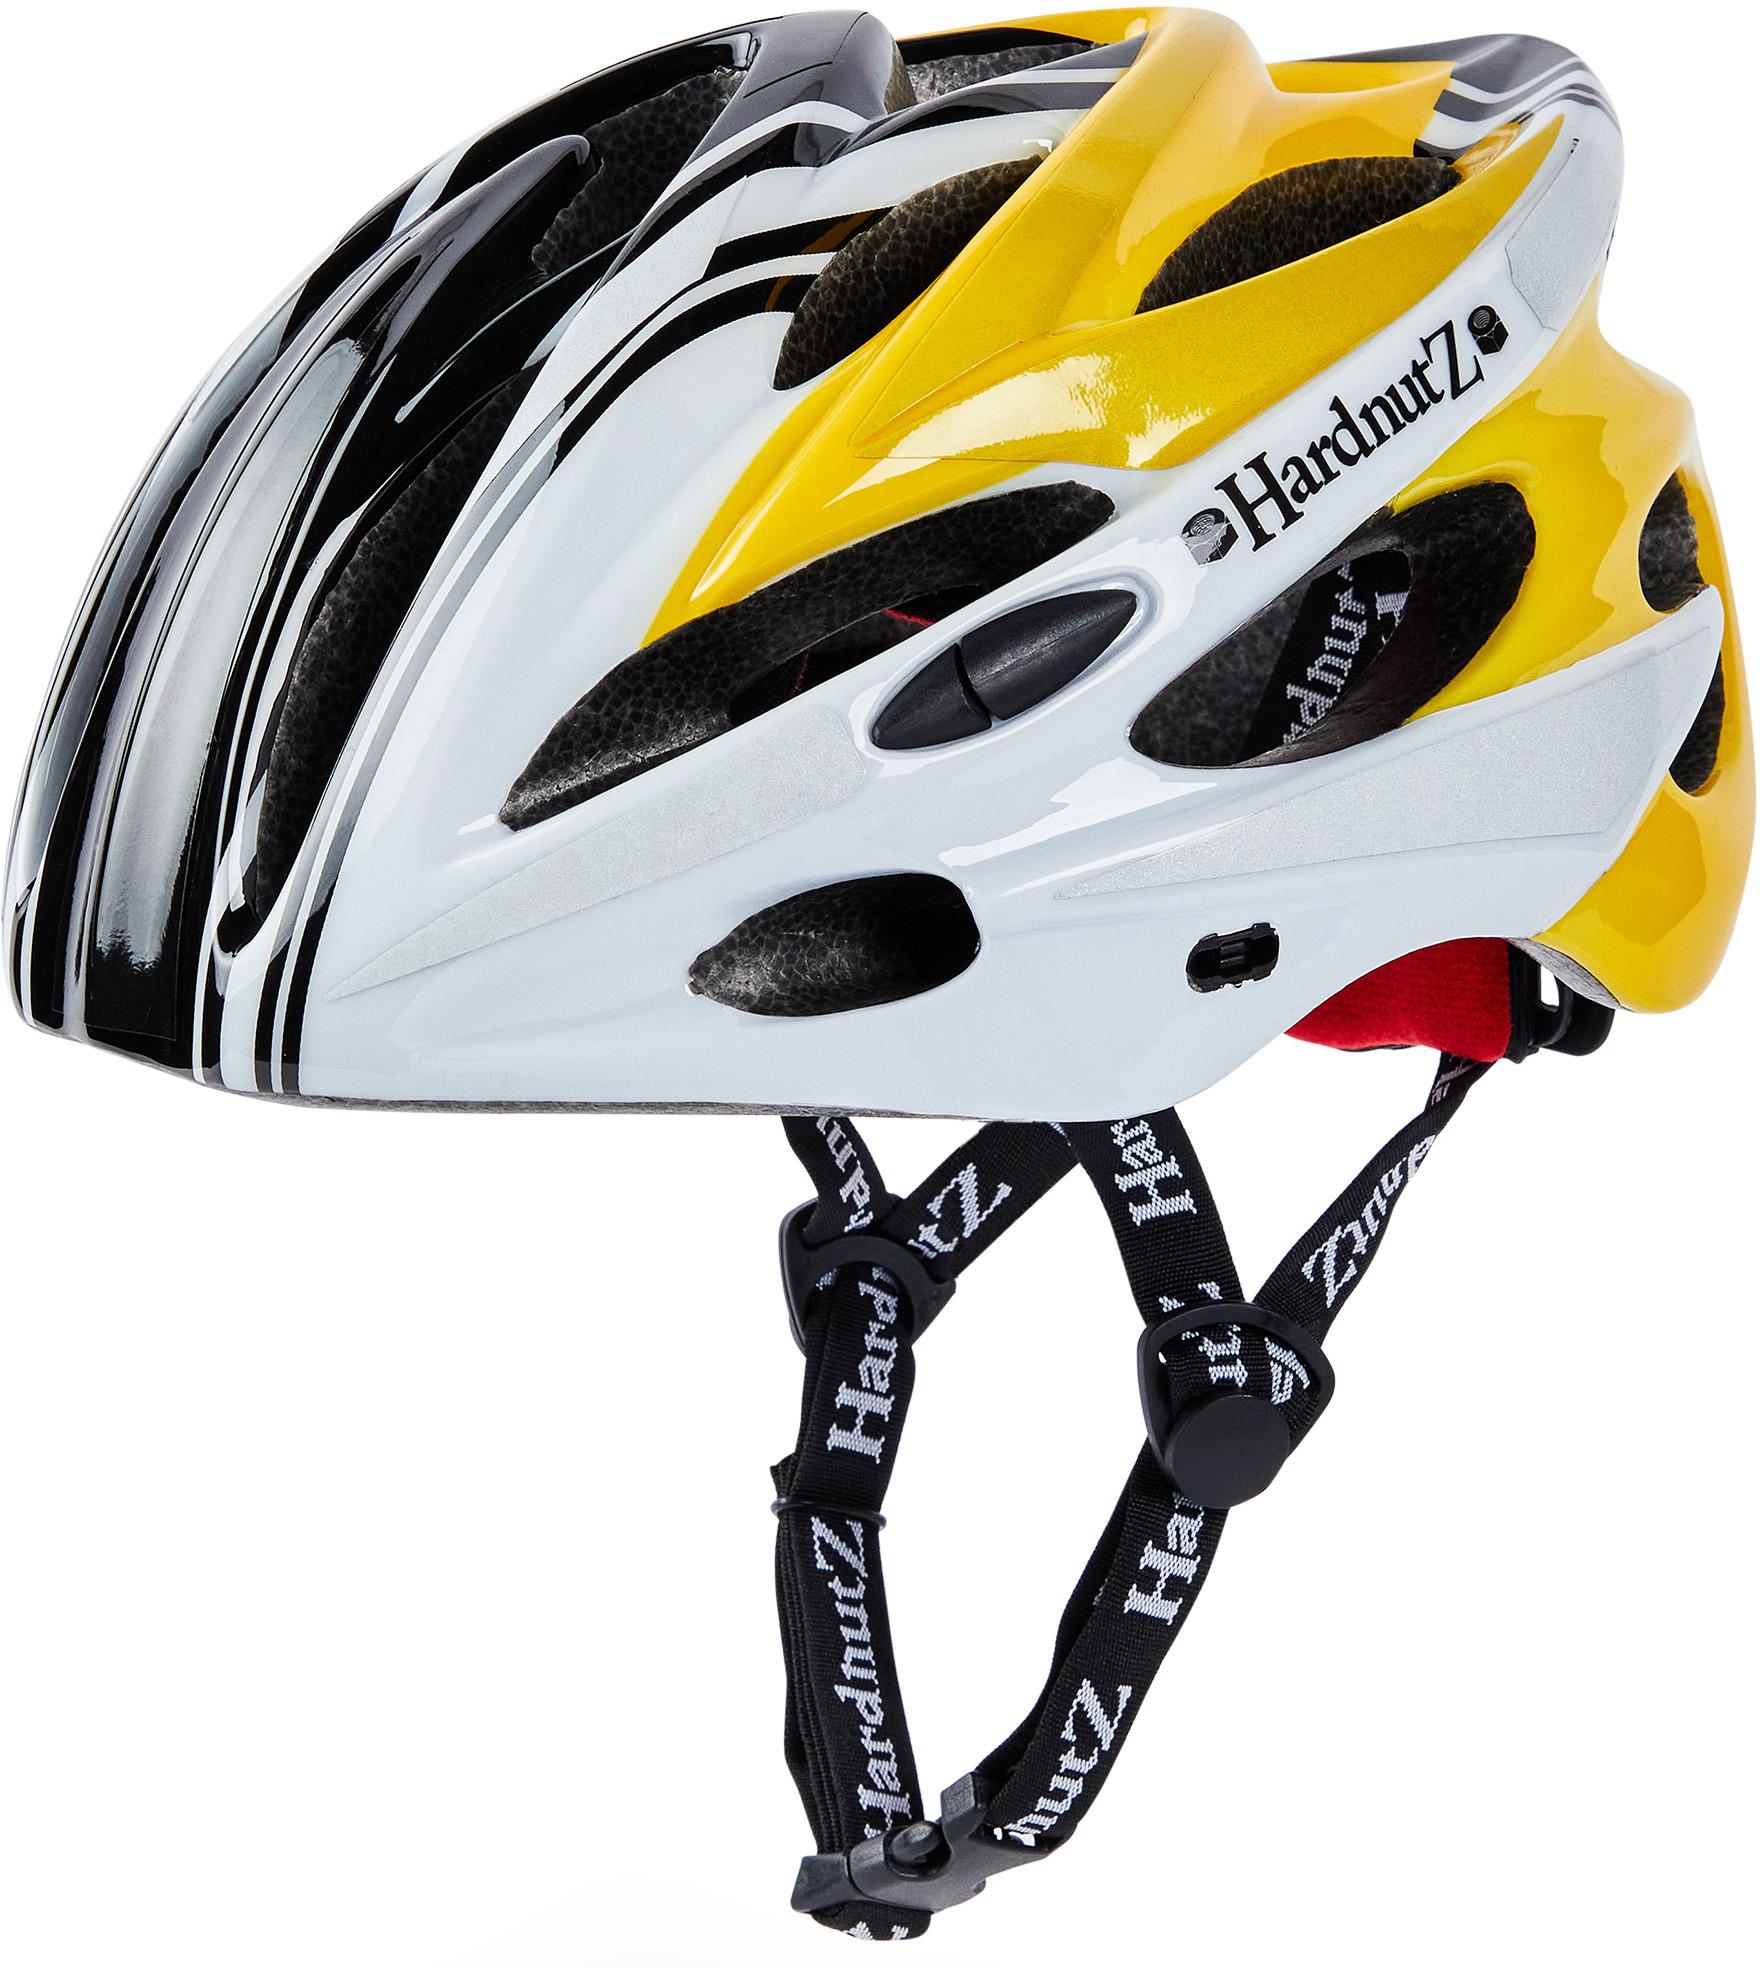 Hardnutz Stealth Hi-Vis Cycle Helmet, Yellow/Black/White